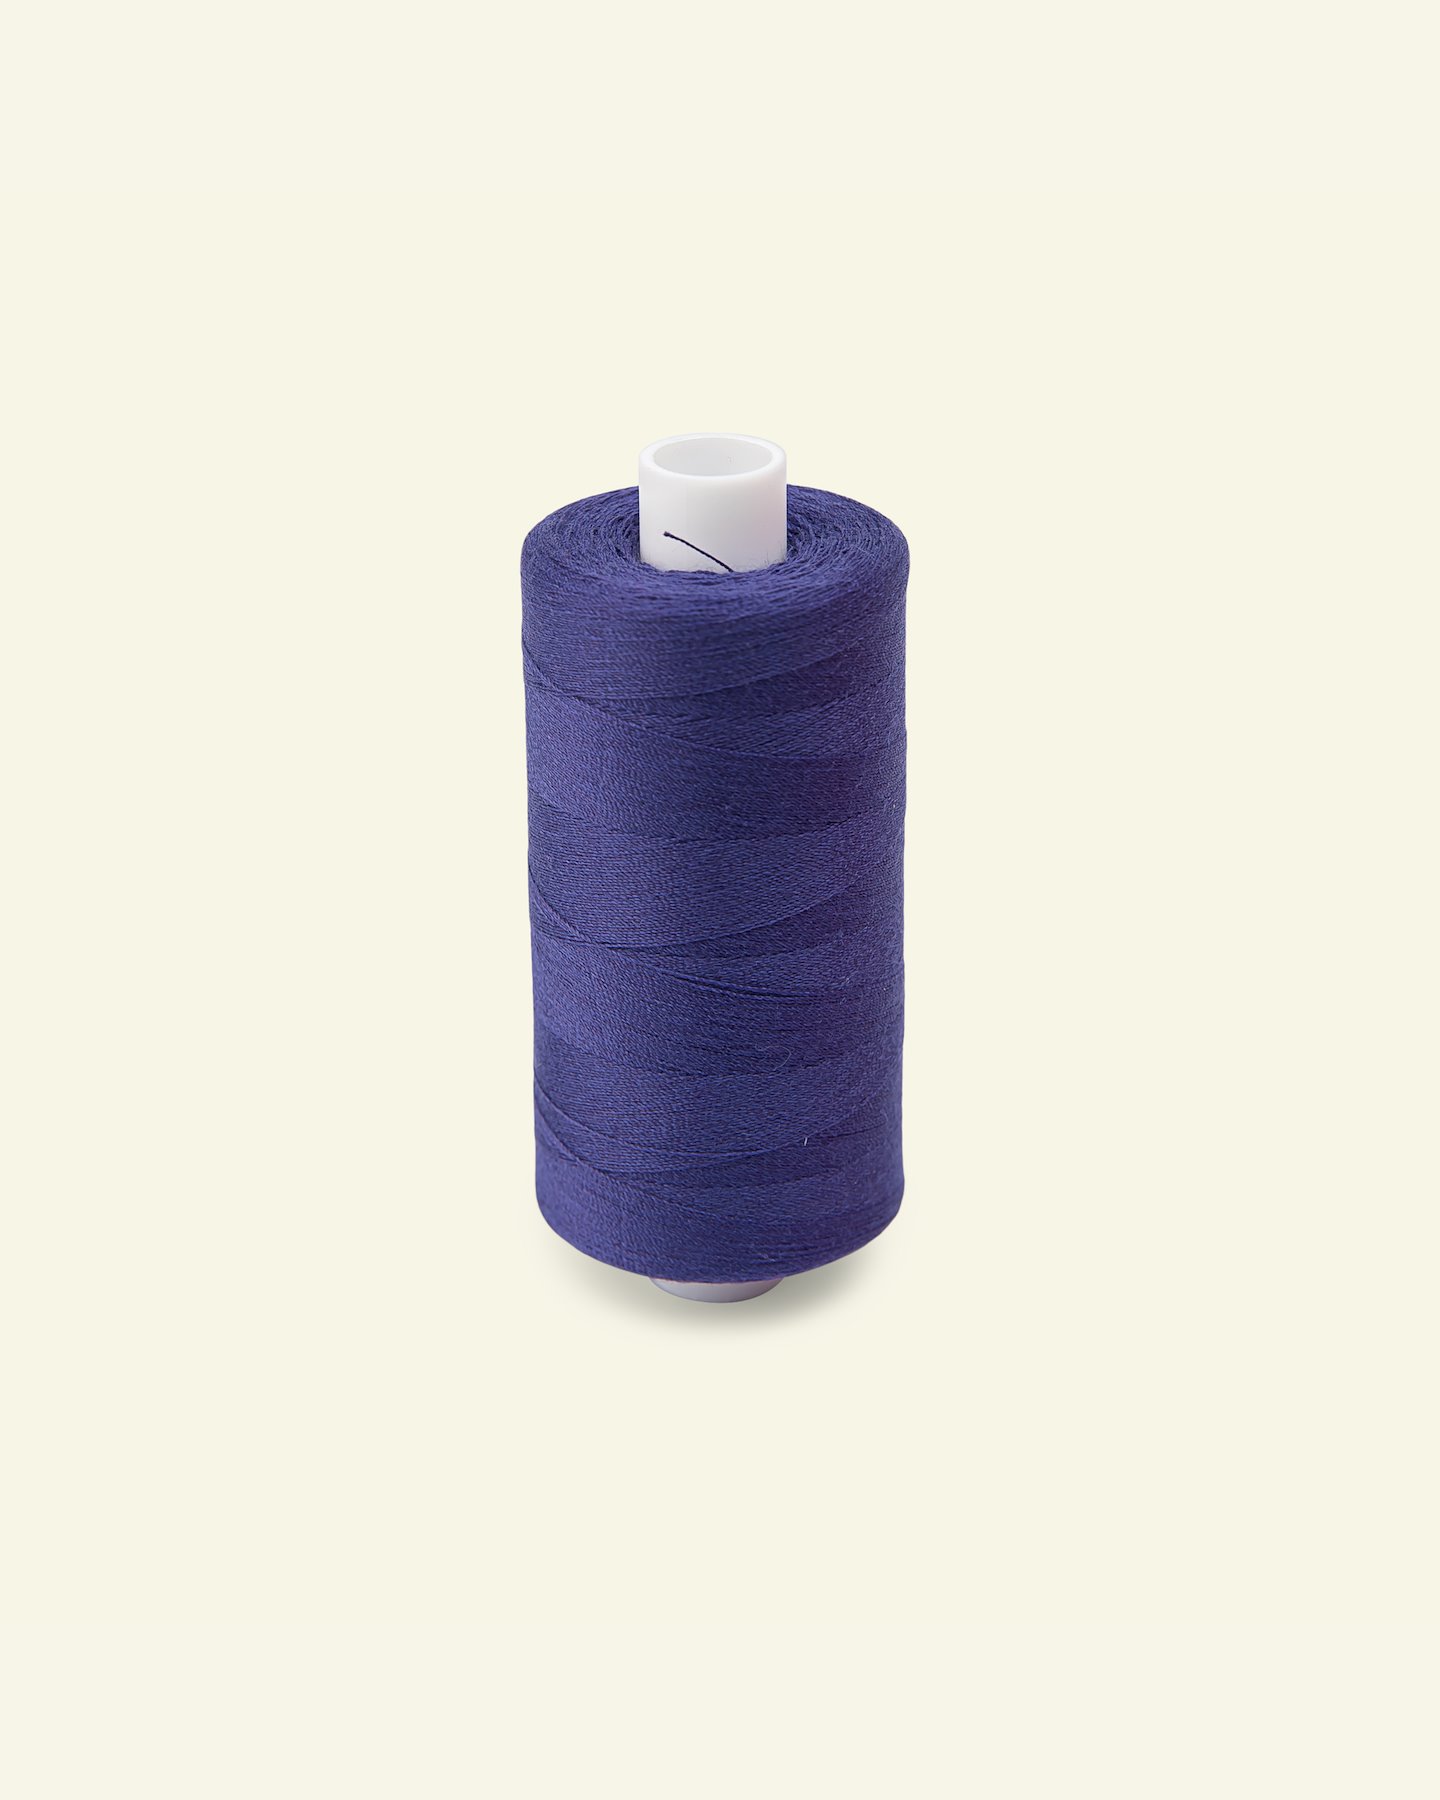 Sewing thread bluepurple 1000m 12102_pack